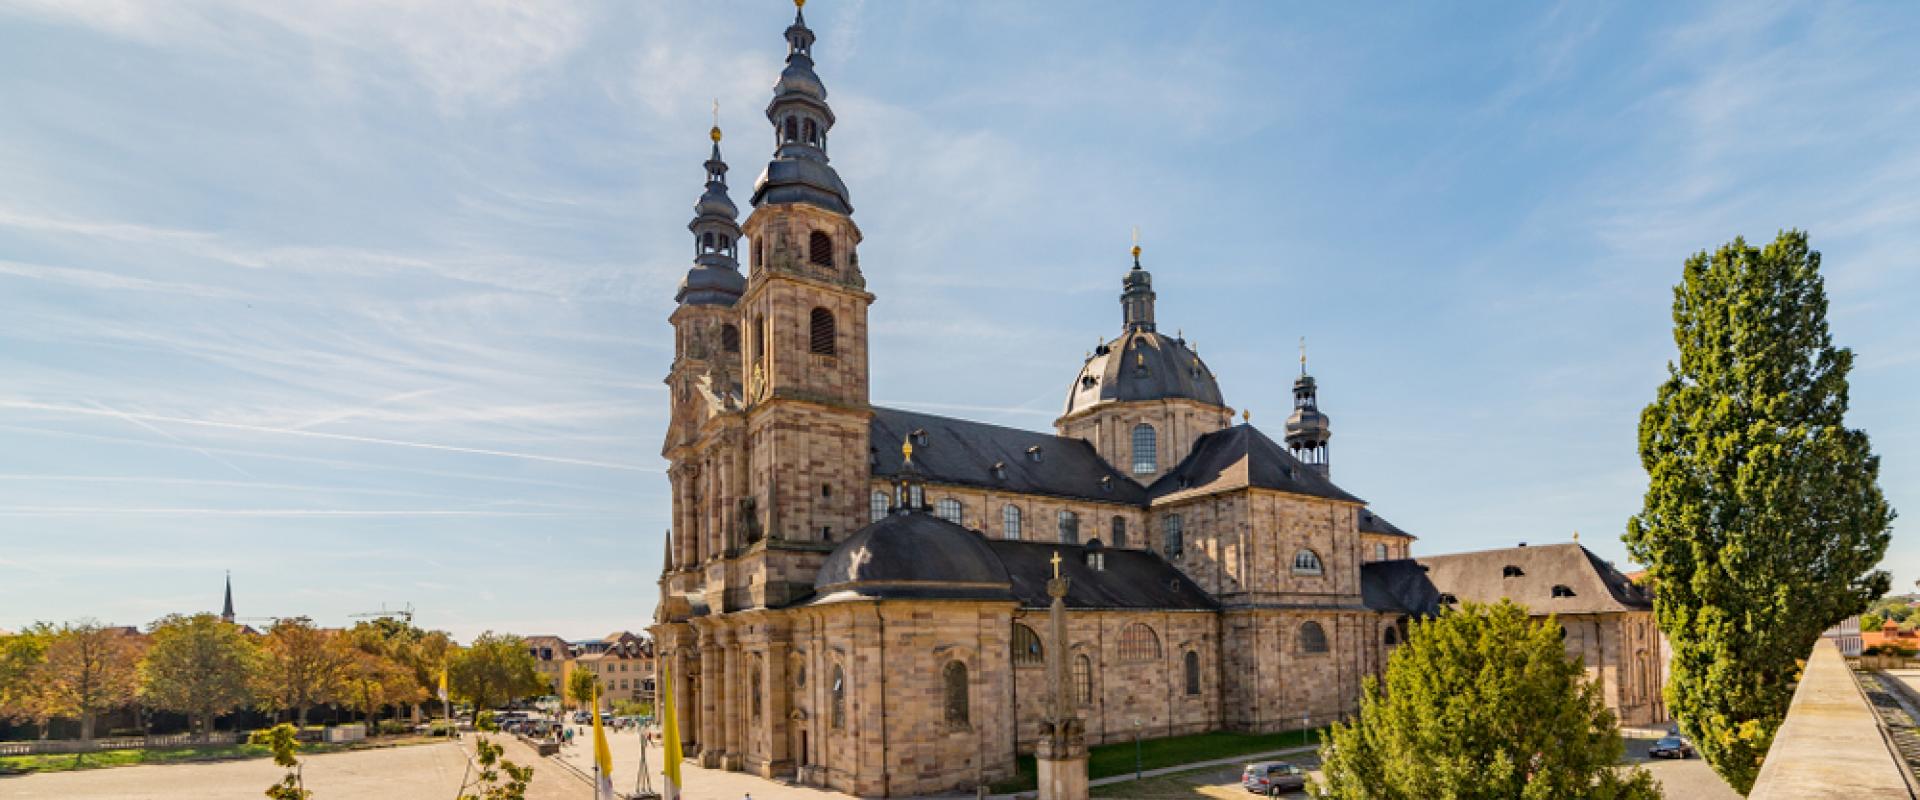 Kathedrale Fulda 